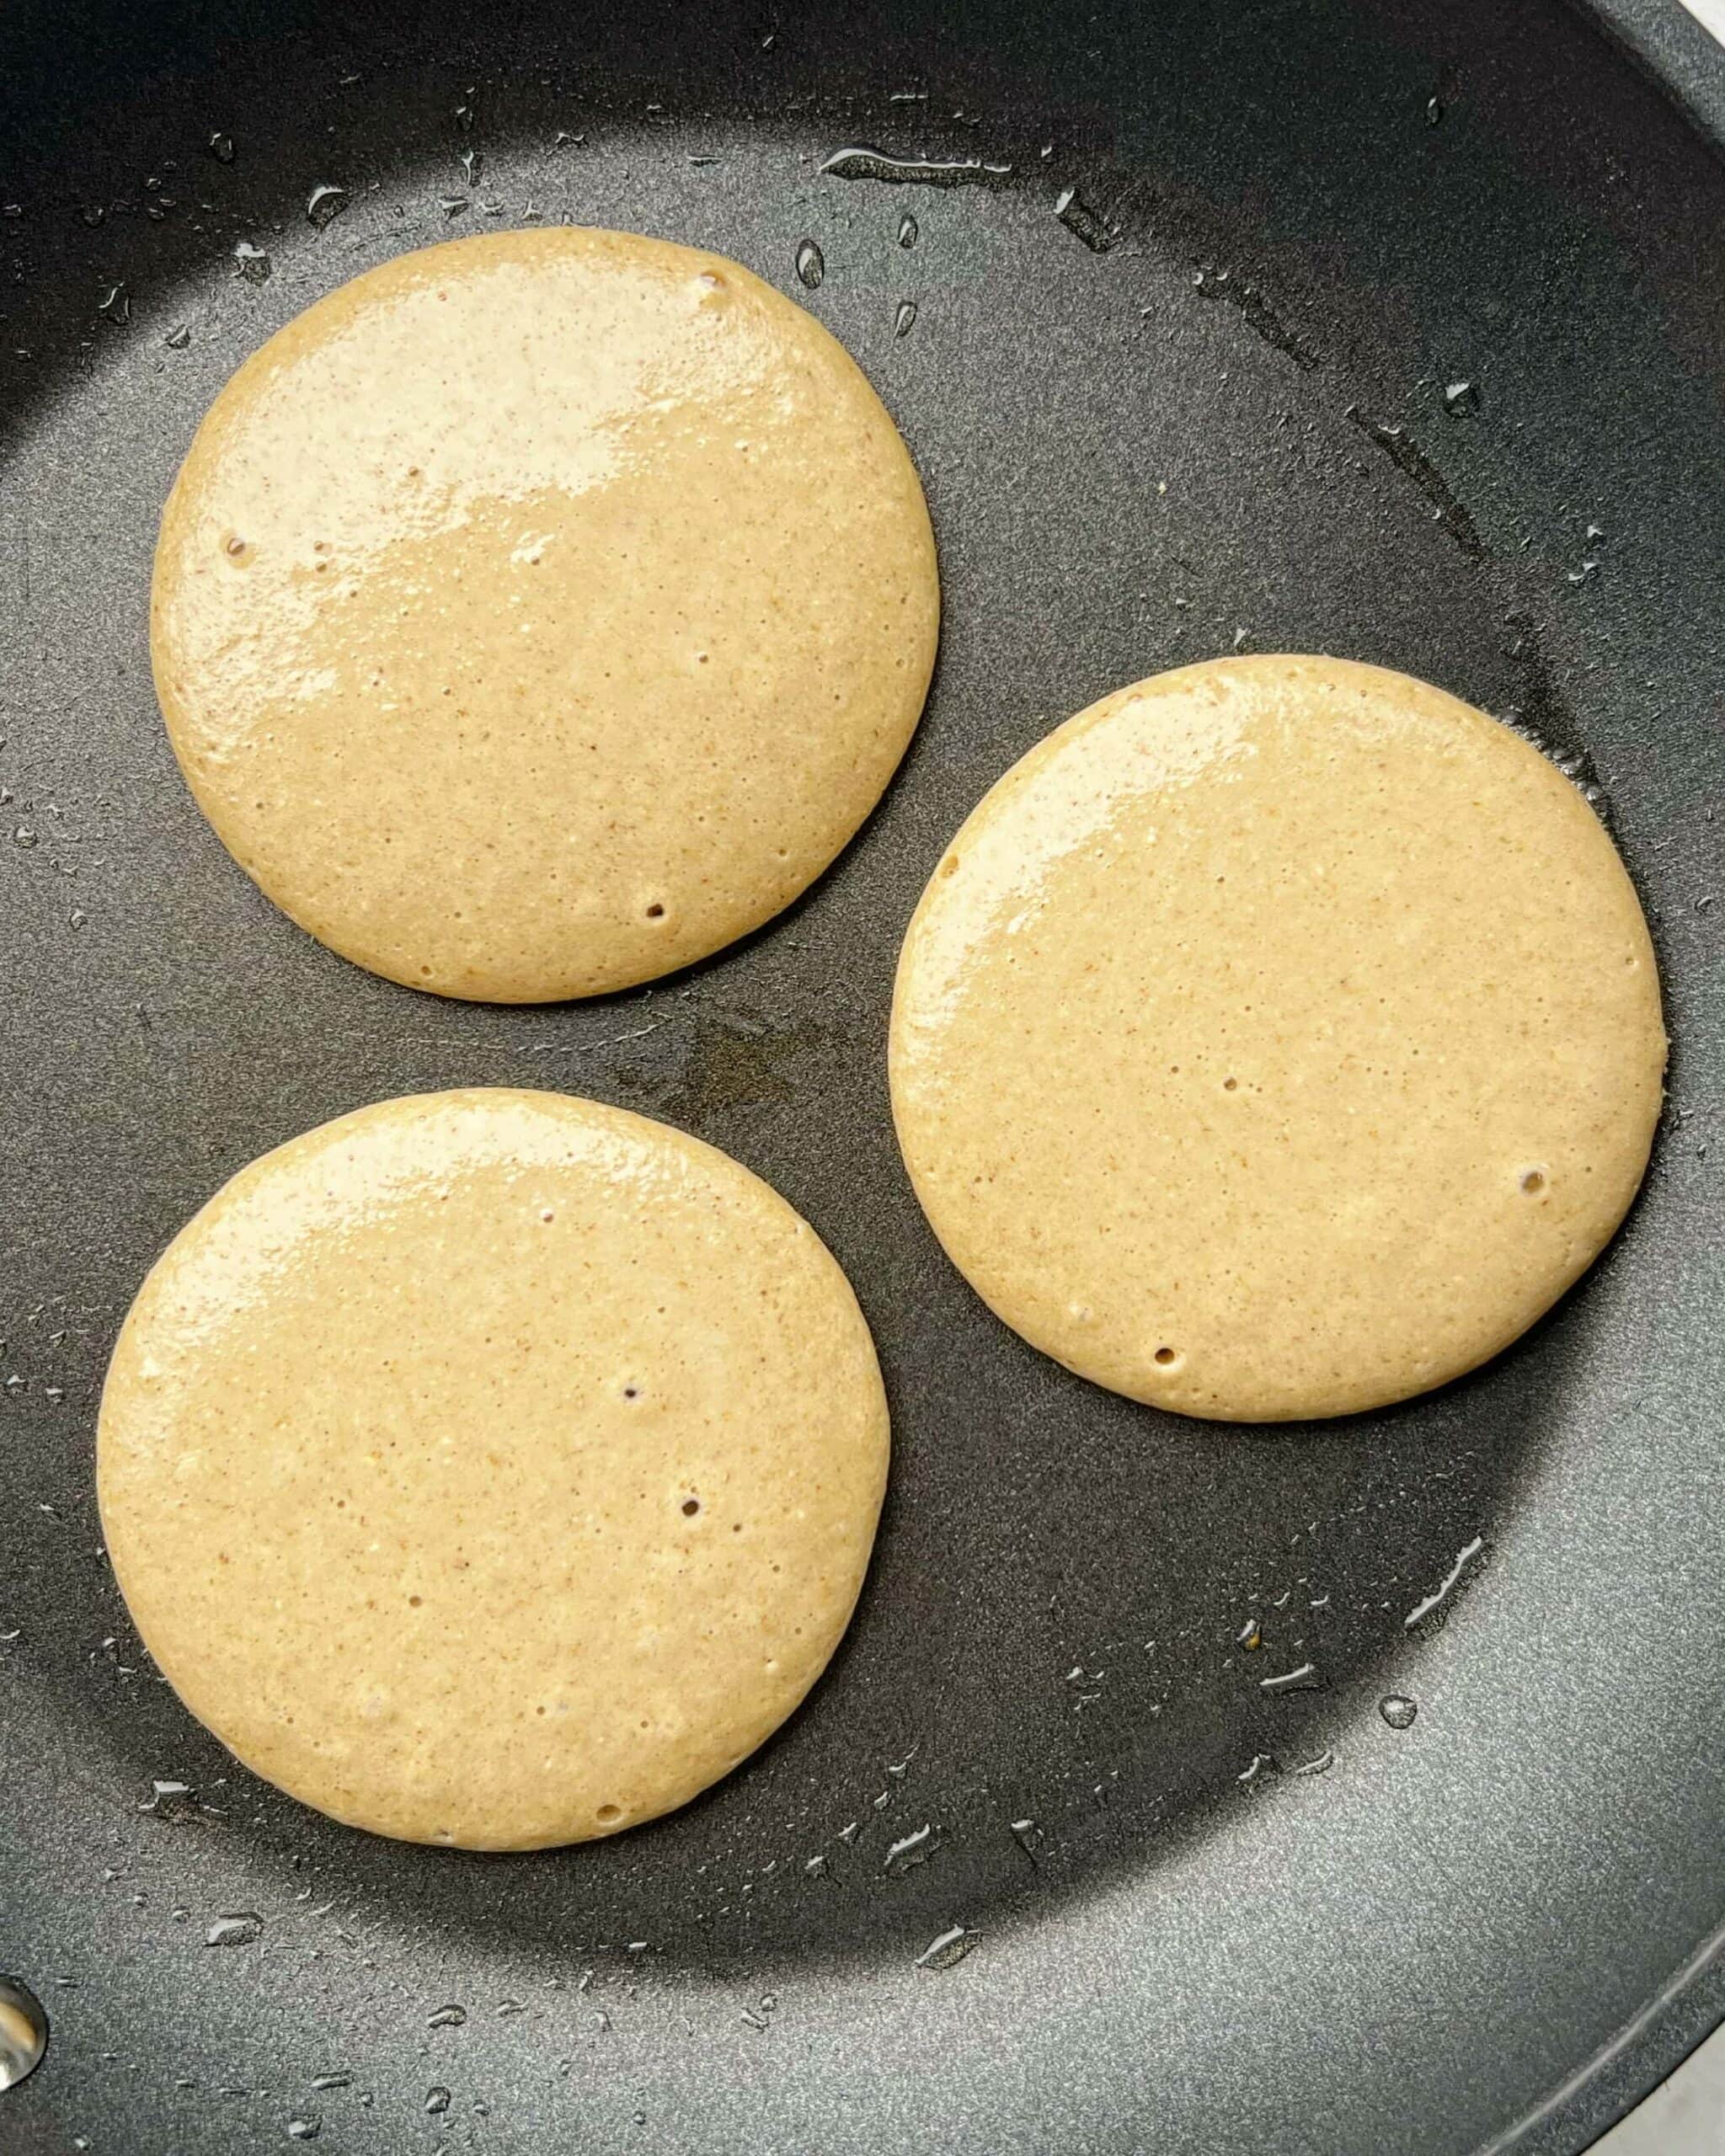 Banana oat pancake batter in a fry pan